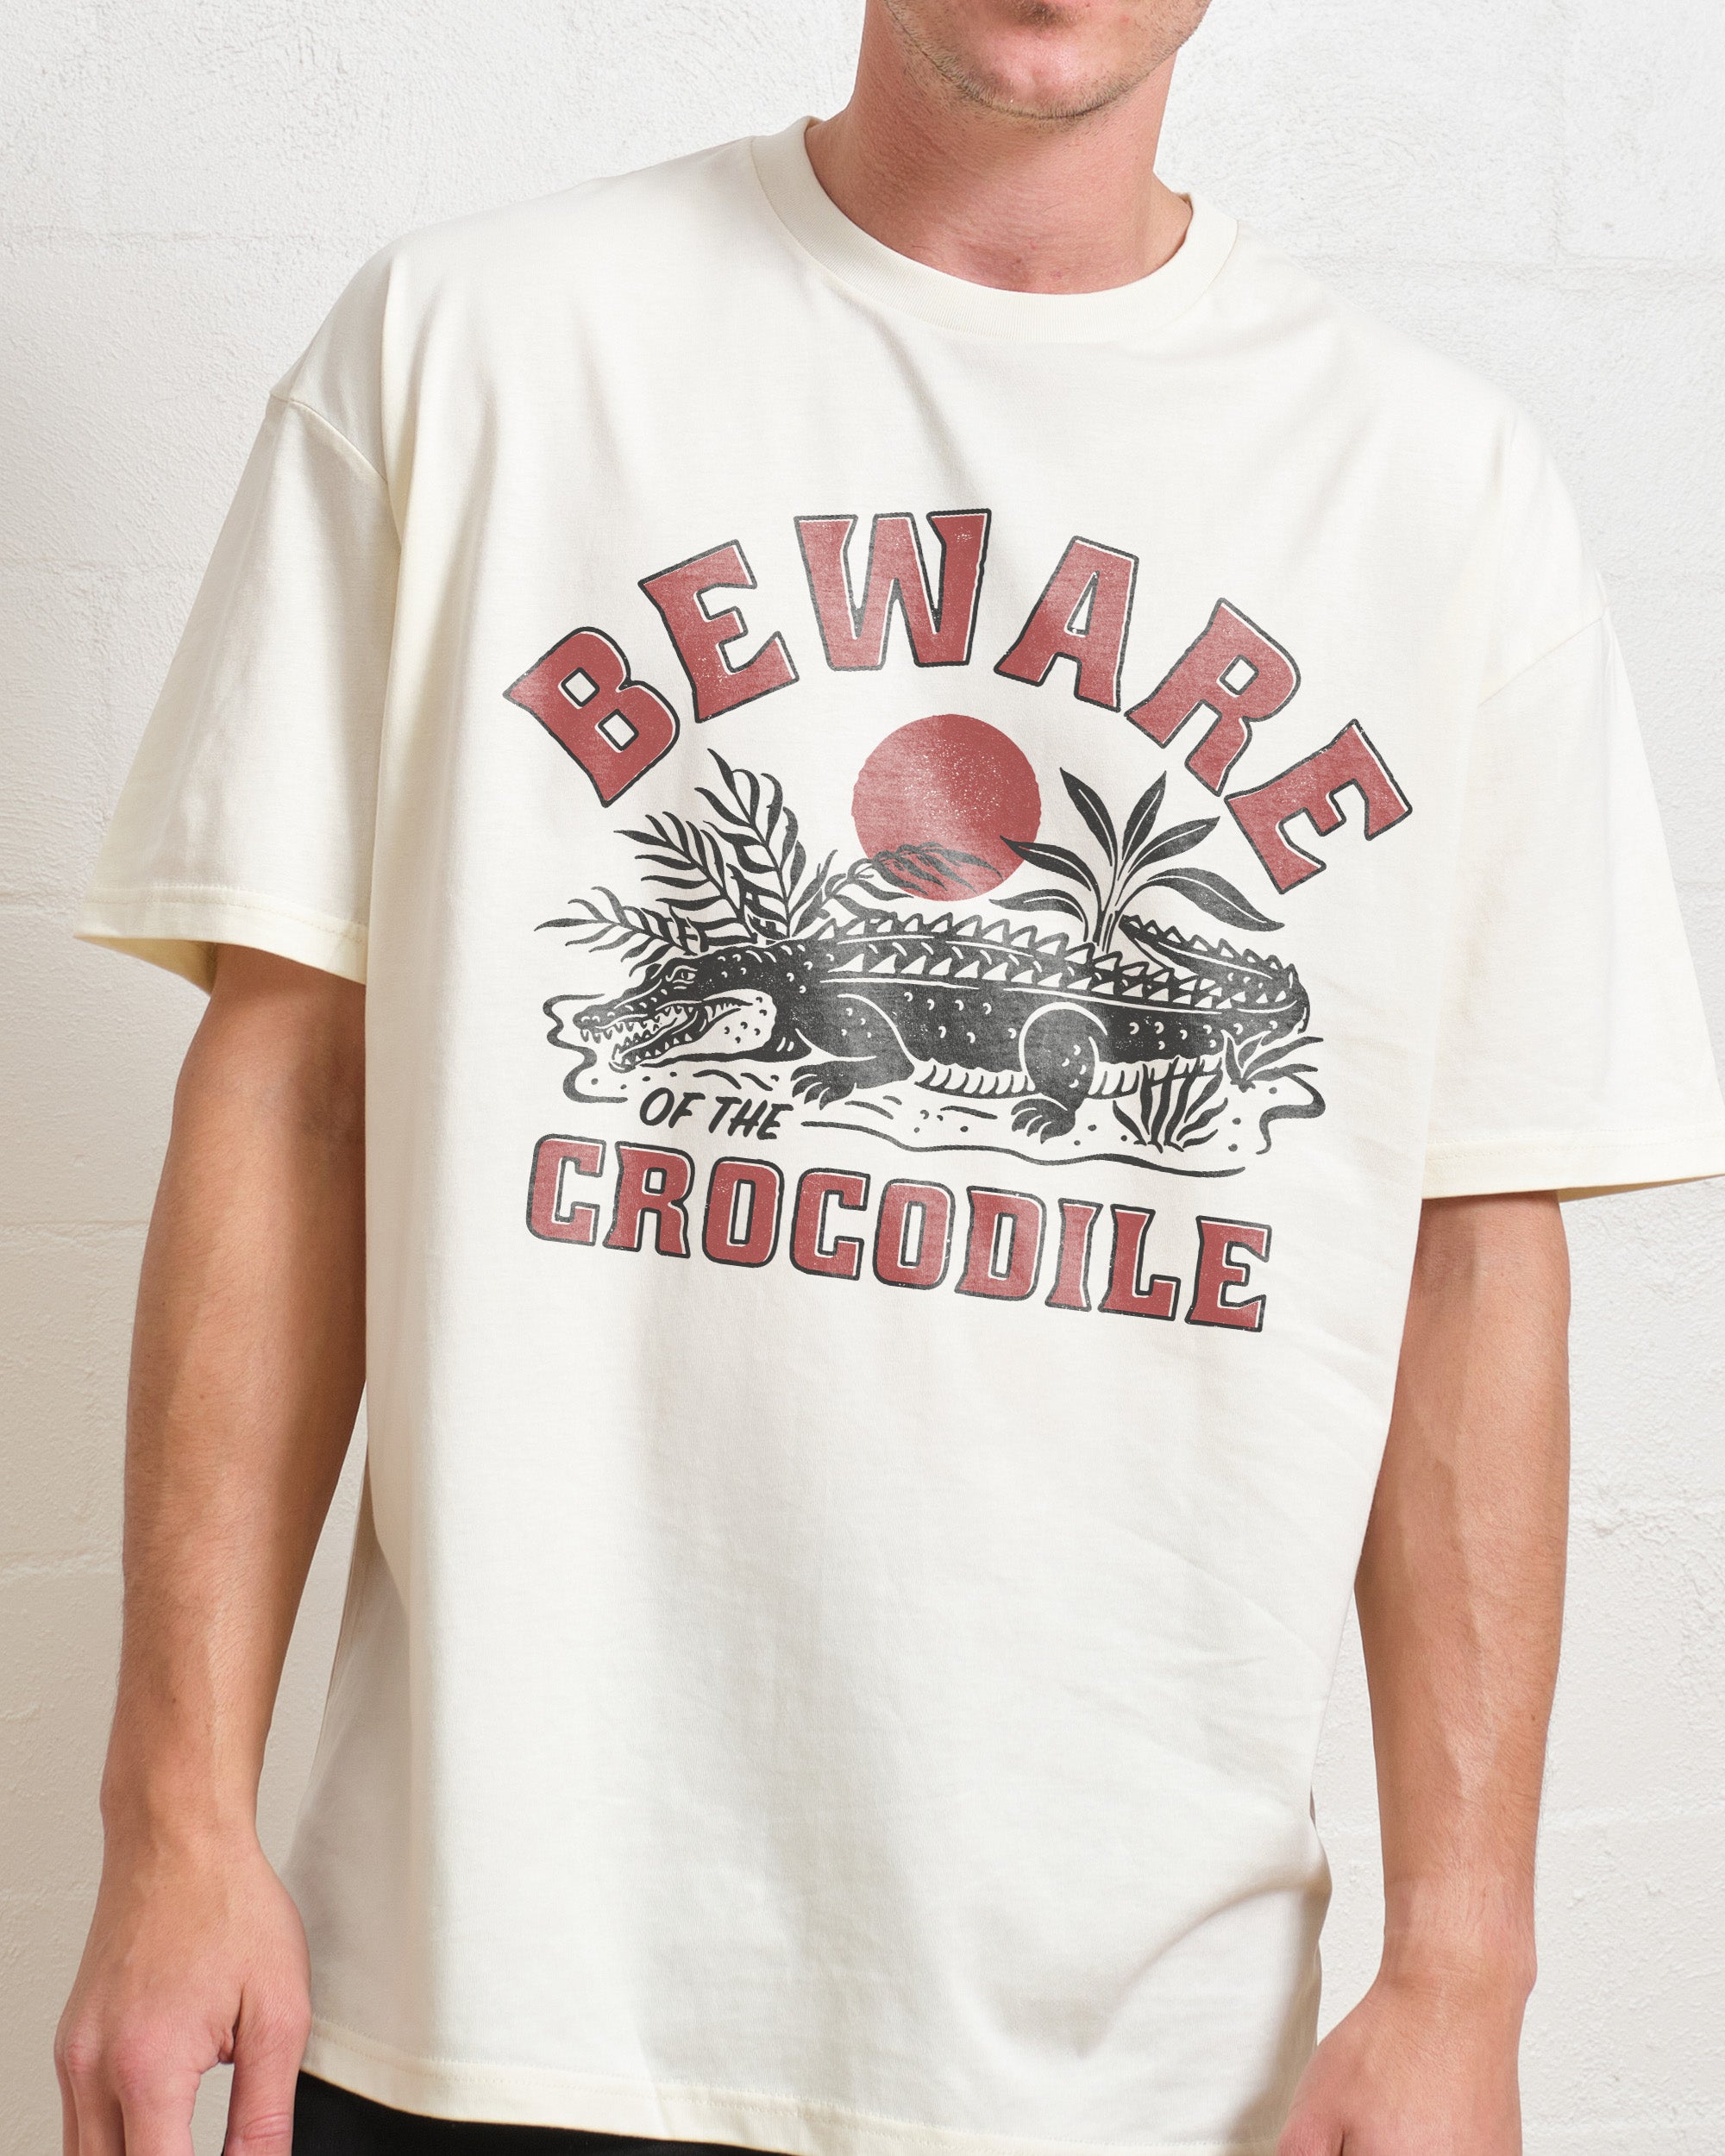 Beware of the Crocodile T-Shirt